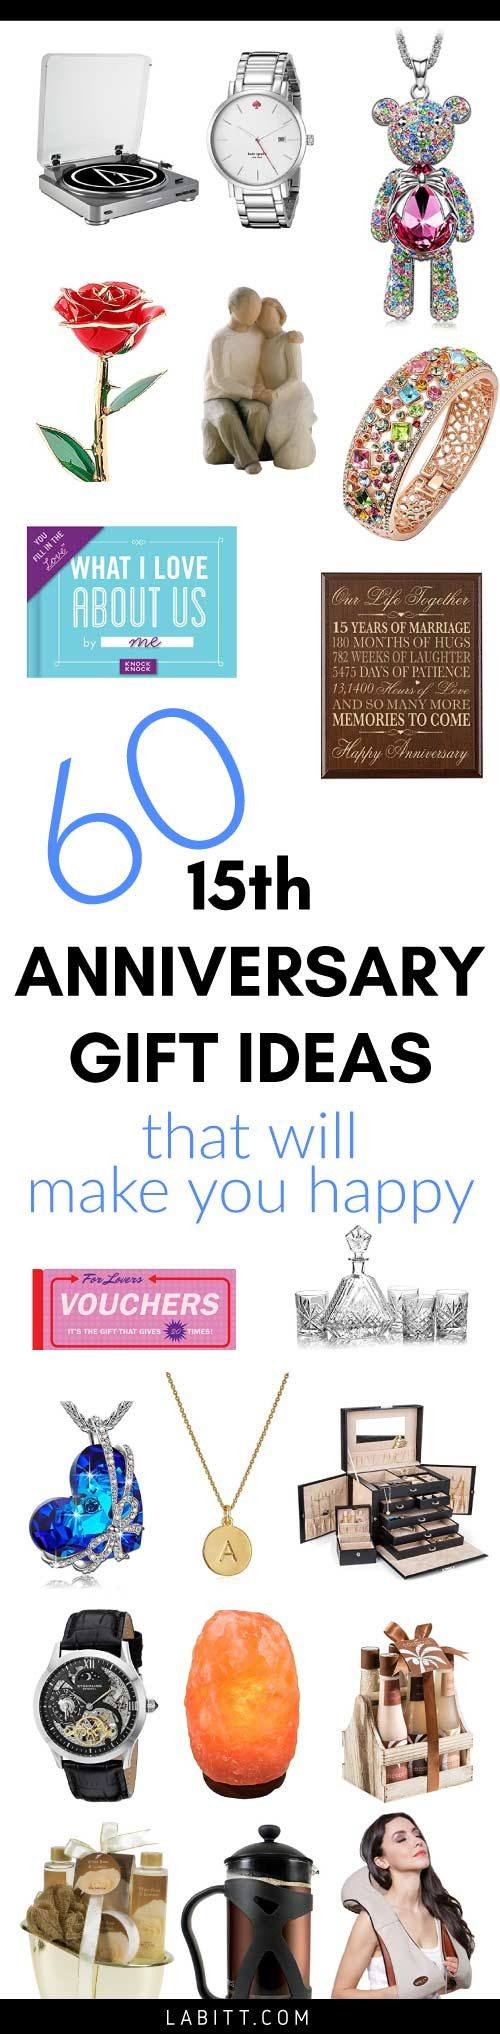 15 Year Anniversary Gift Ideas For Him
 15th Wedding Anniversary Gift Ideas for Her